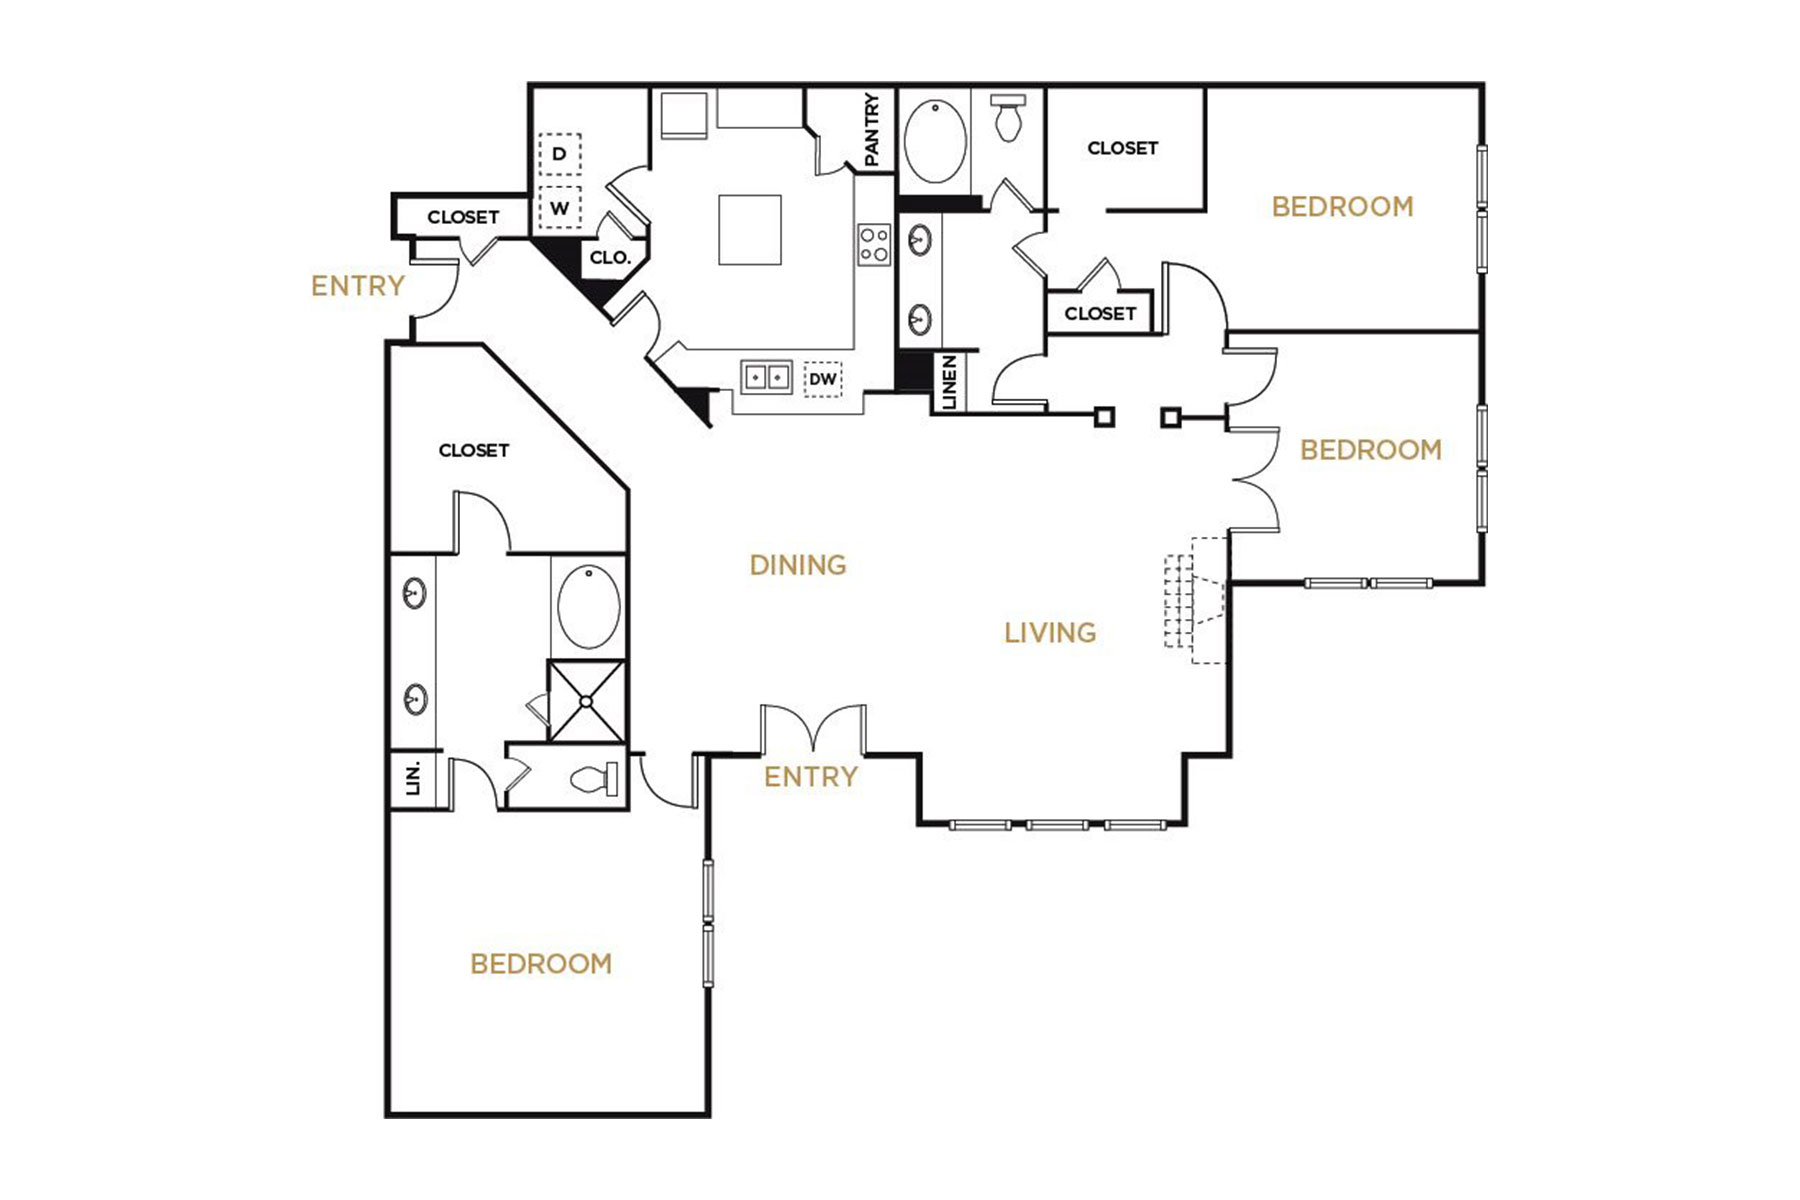 Residence C1 - 3 Bedroom Floorplan - Alto at Highland Park Apartments